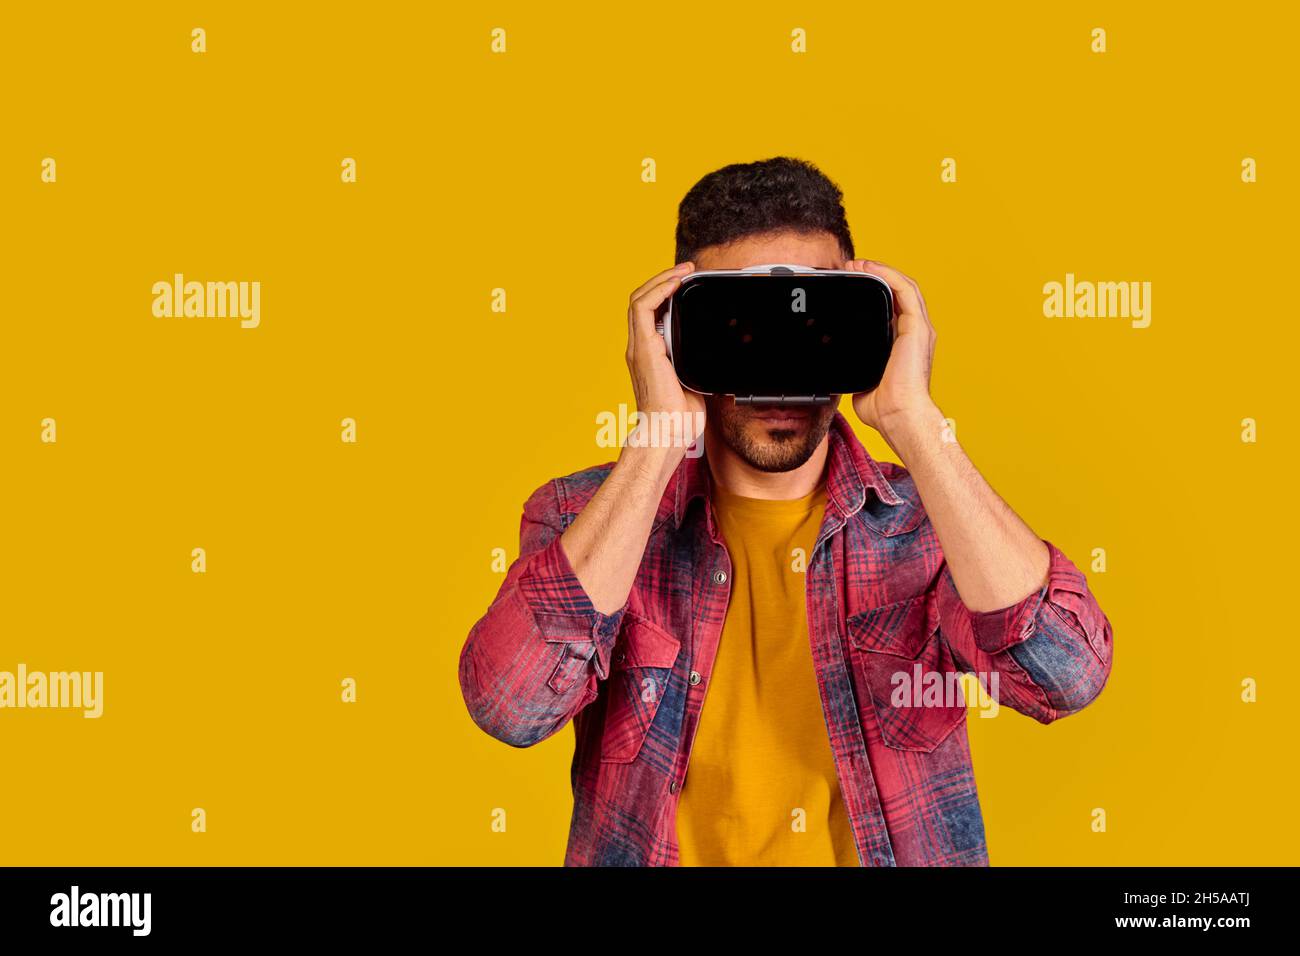 Man having fun with virtual reality glasses. Studio shot, yellow background Stock Photo